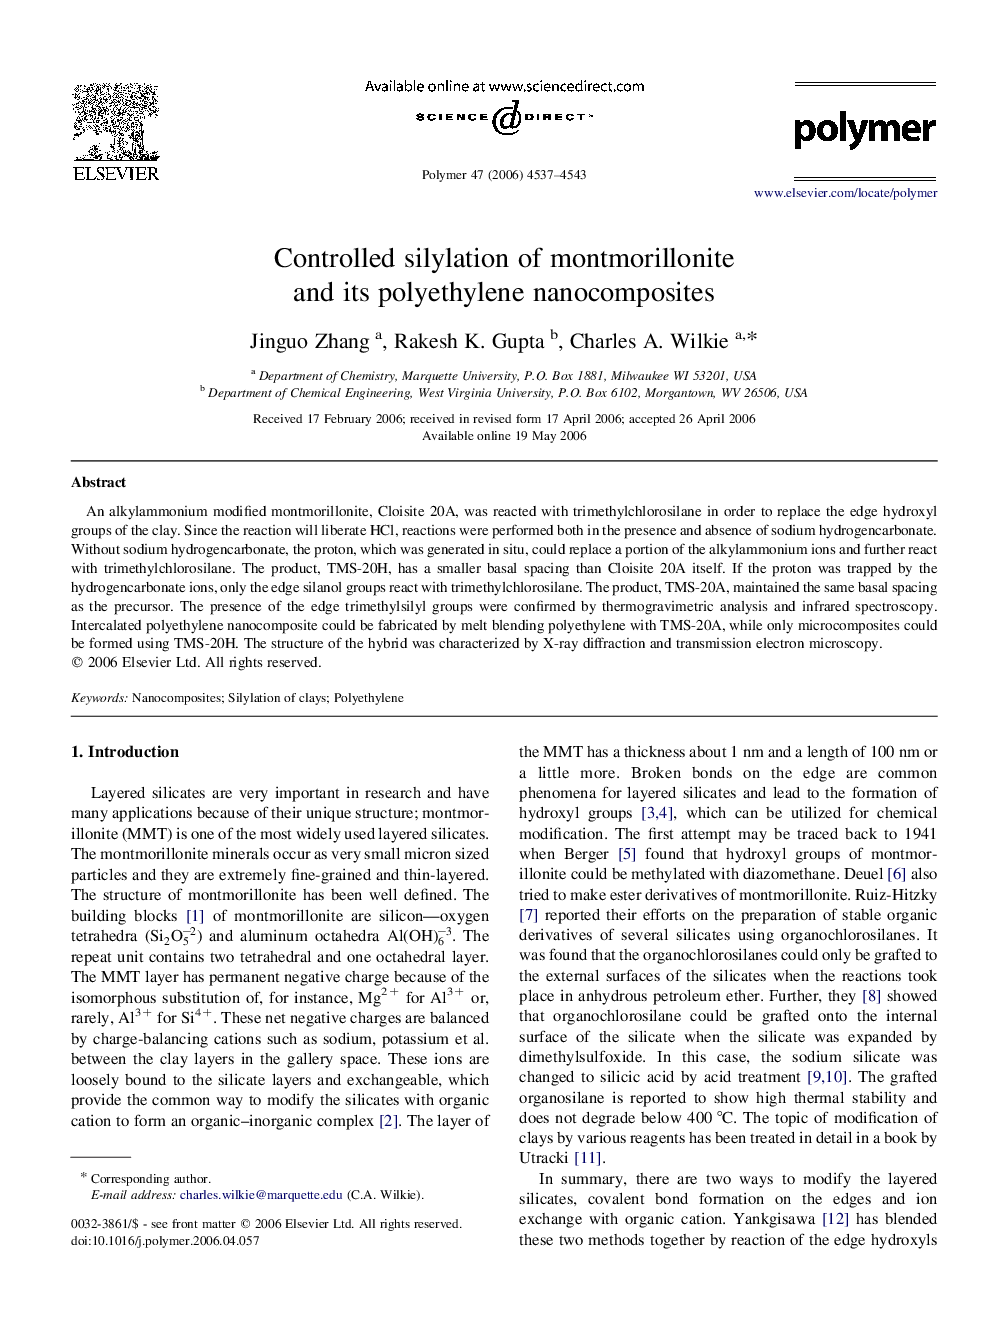 Controlled silylation of montmorillonite and its polyethylene nanocomposites